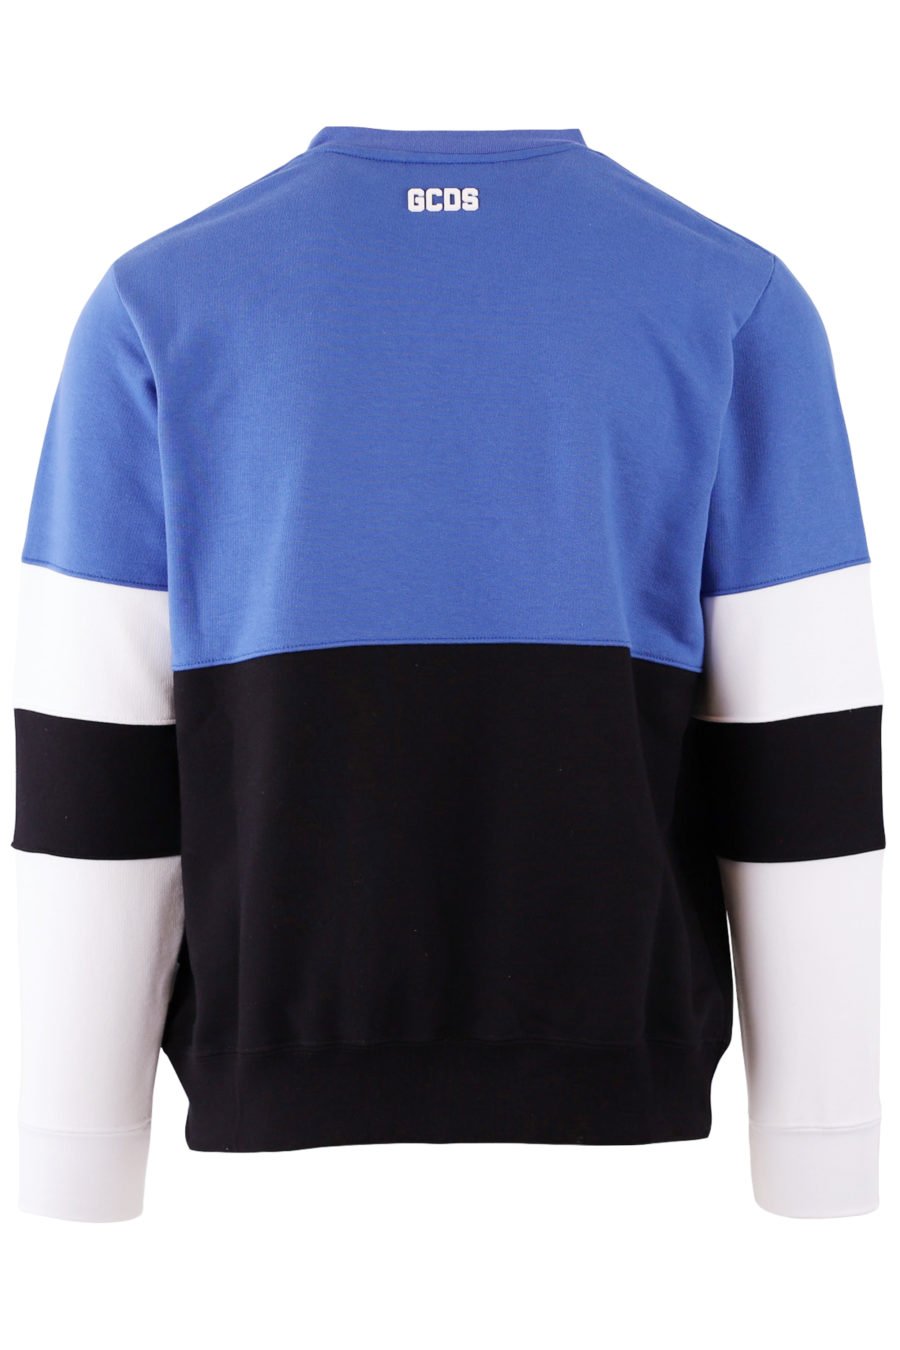 Blue colour block sweatshirt with logo - IMG 7687 copy